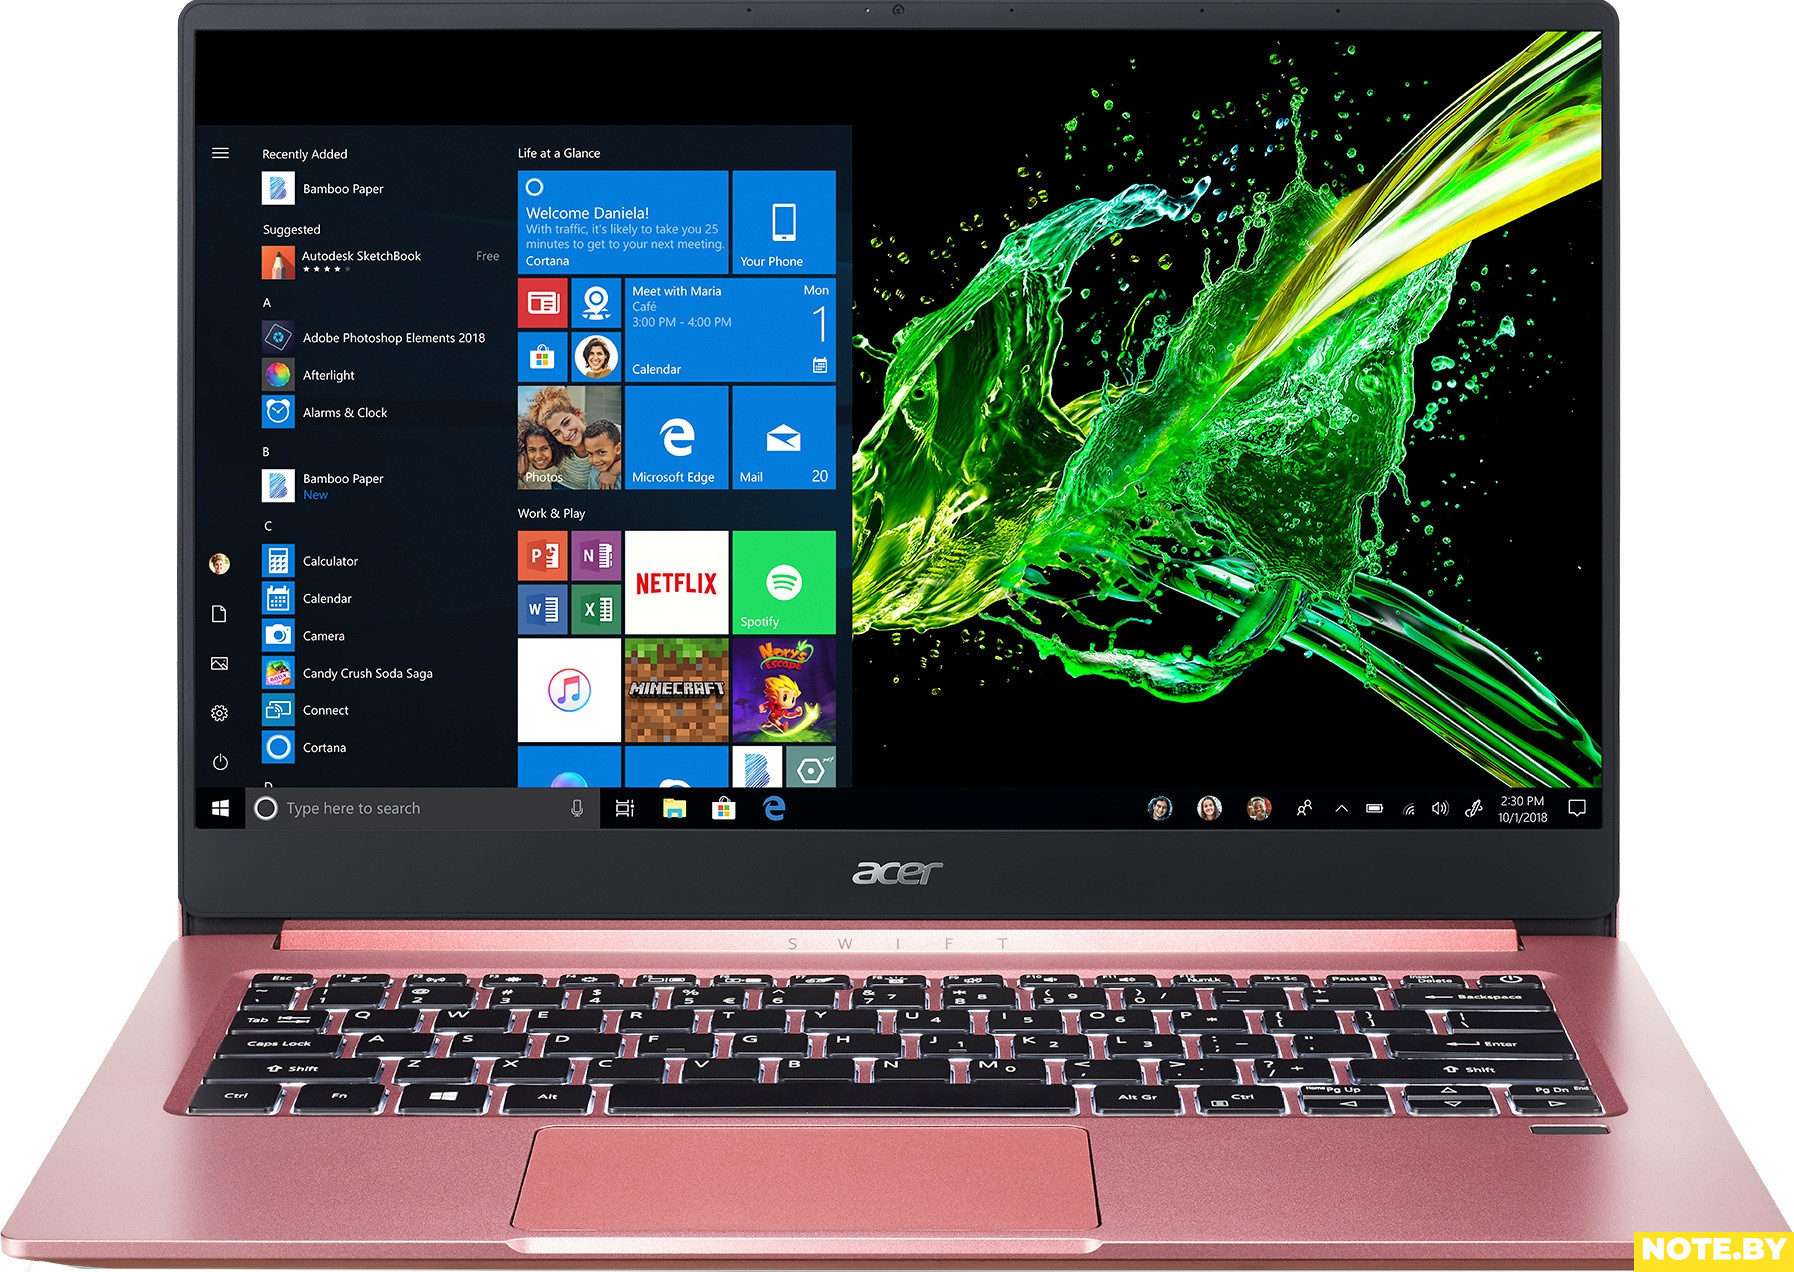 Ноутбук Acer Swift 3 SF314-57-779V NX.HJMER.002